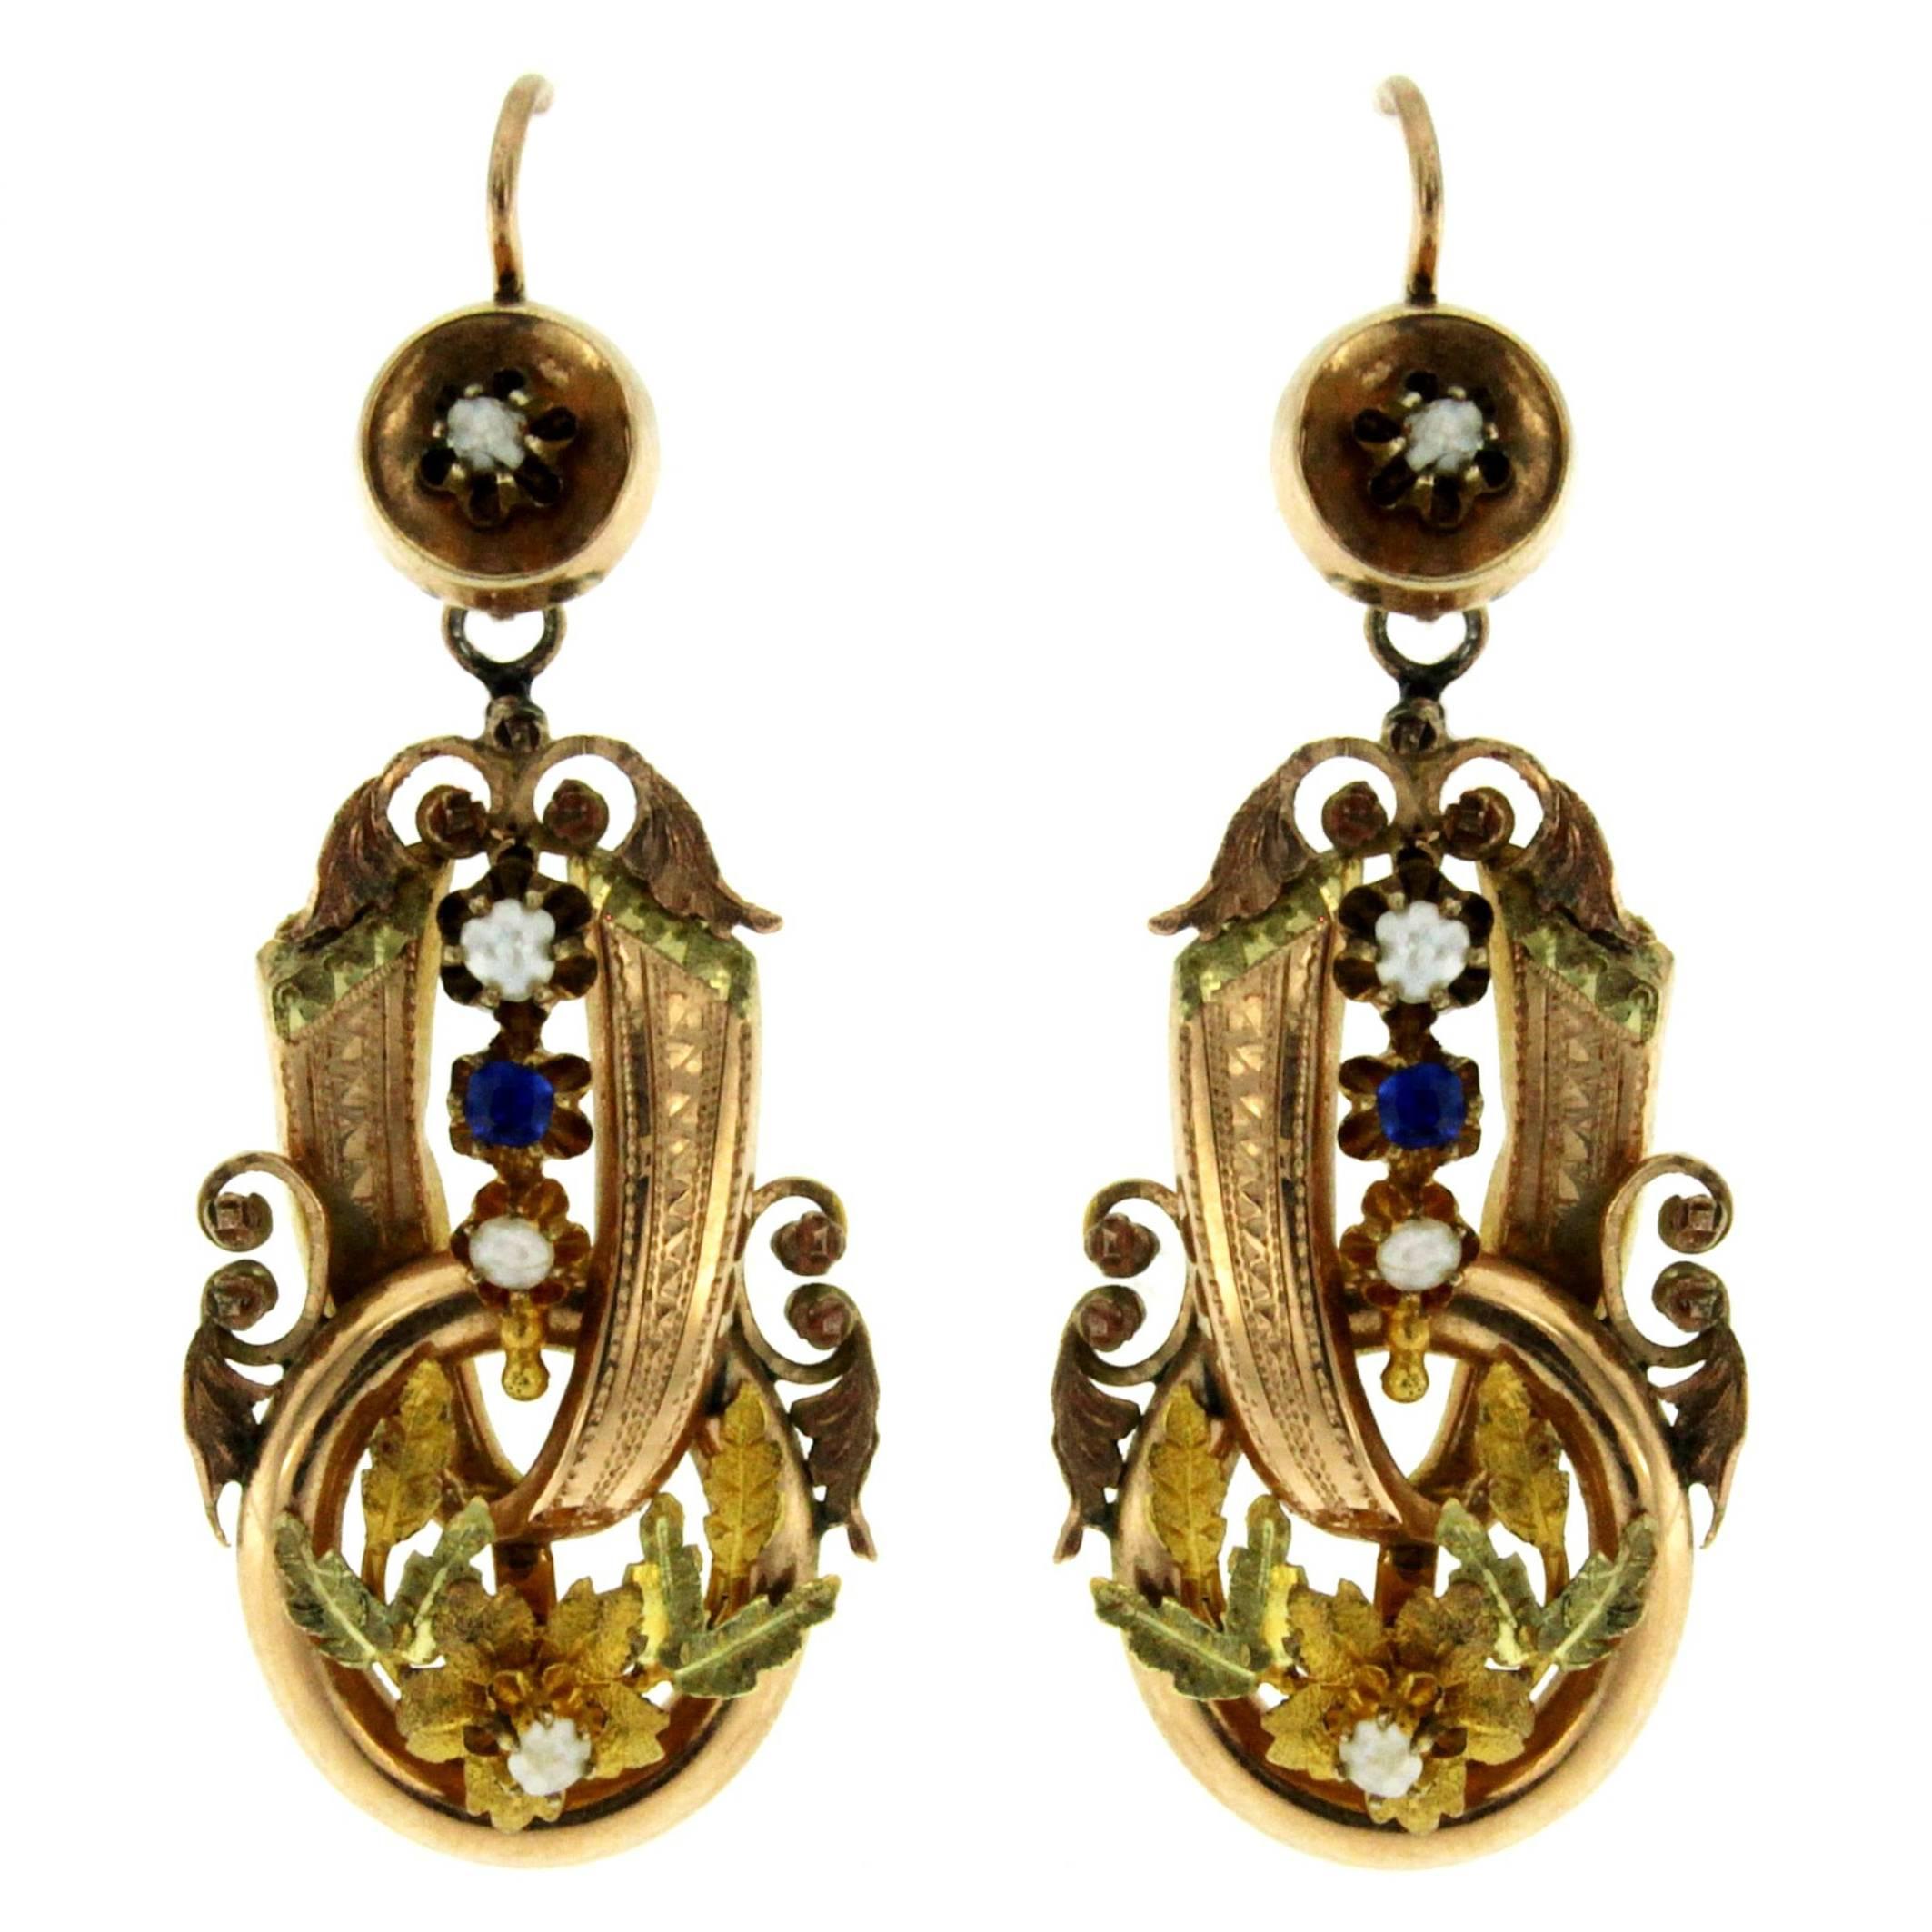 Antique Neapolitan Gold Earrings